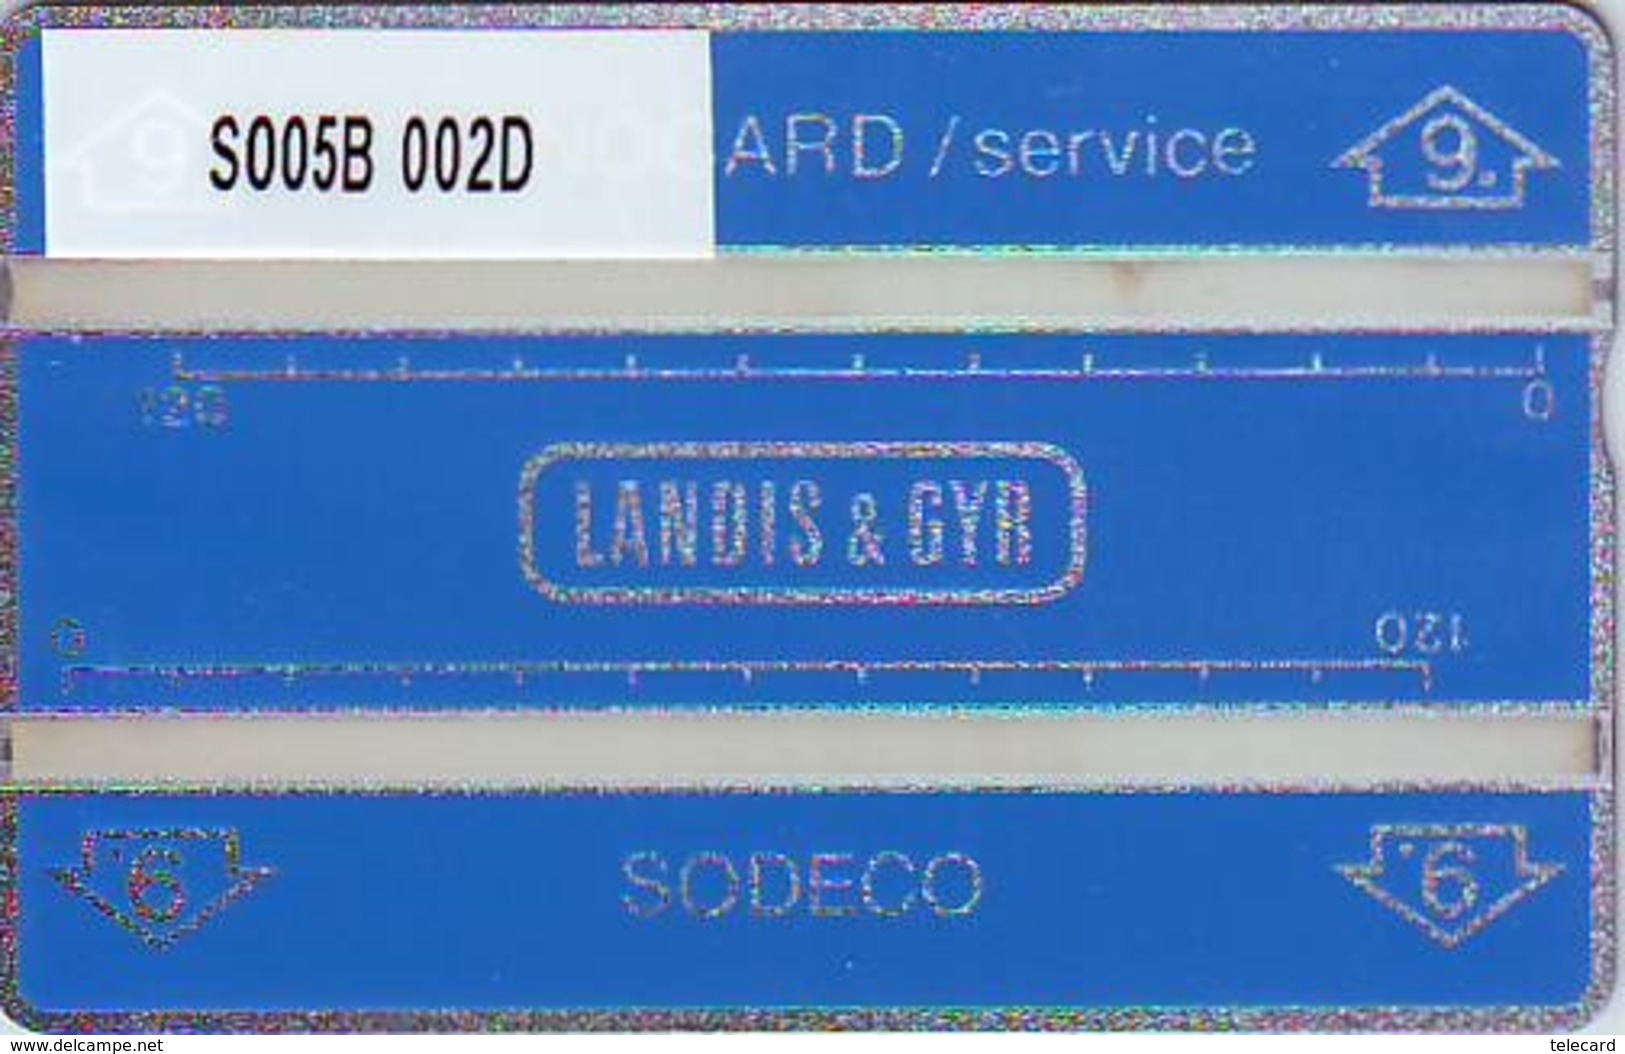 NEDERLAND LANDIS&GYR * SODECO * SERVICE CARD NR S005B 002D  "9"  3 Mm ONGEBRUIKT *  MINT - [4] Test & Services